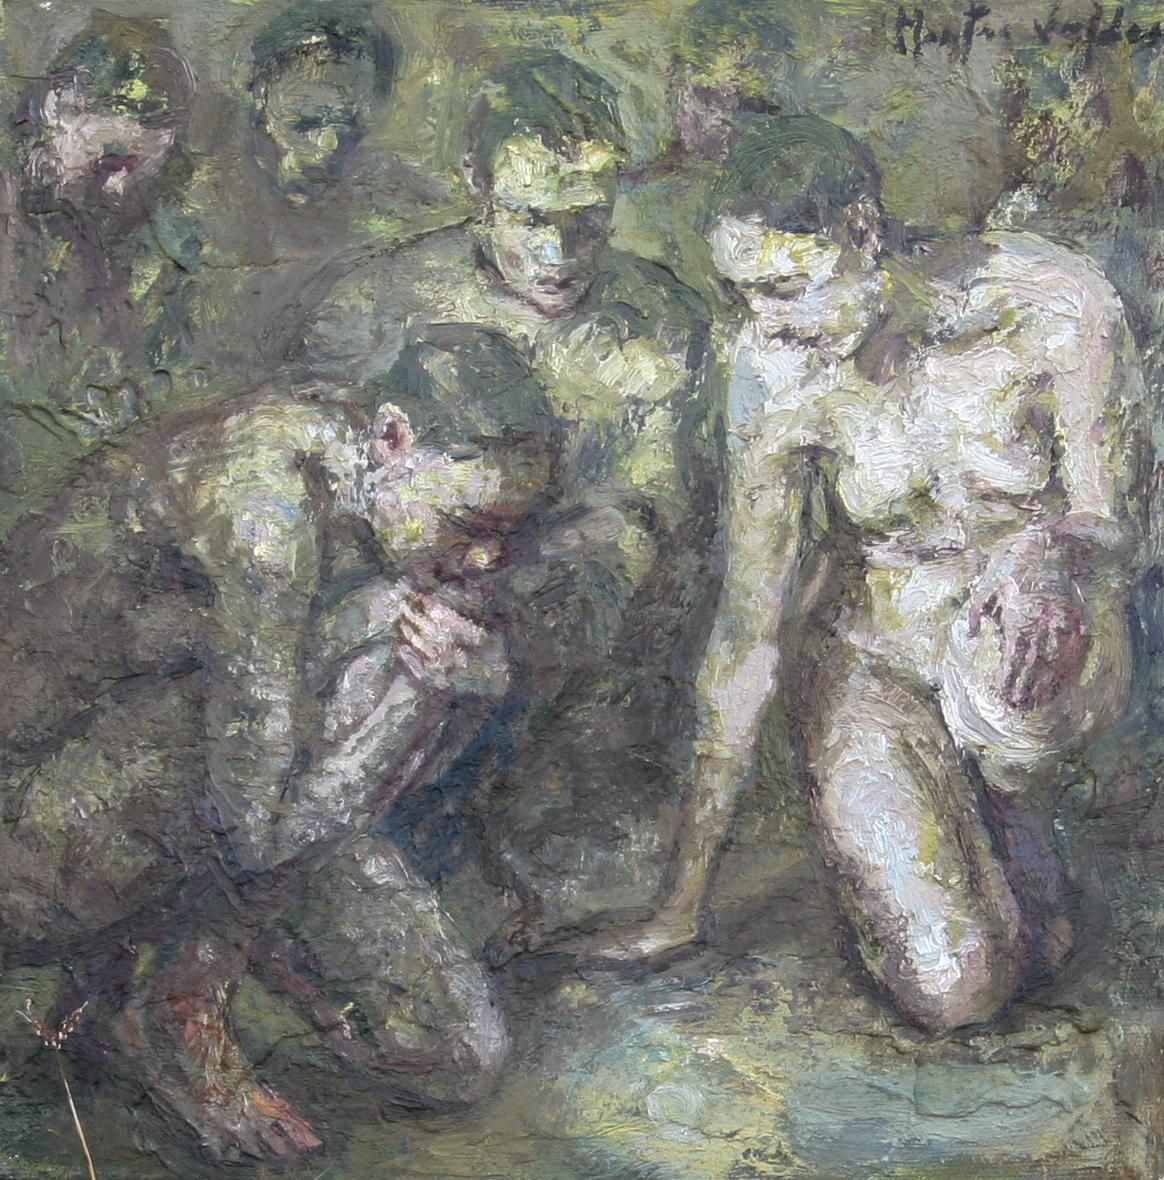 Montse Valdés Portrait Painting - 3-4-05 - 21st Century, Contemporary, Nude Painting, Oil on Canvas